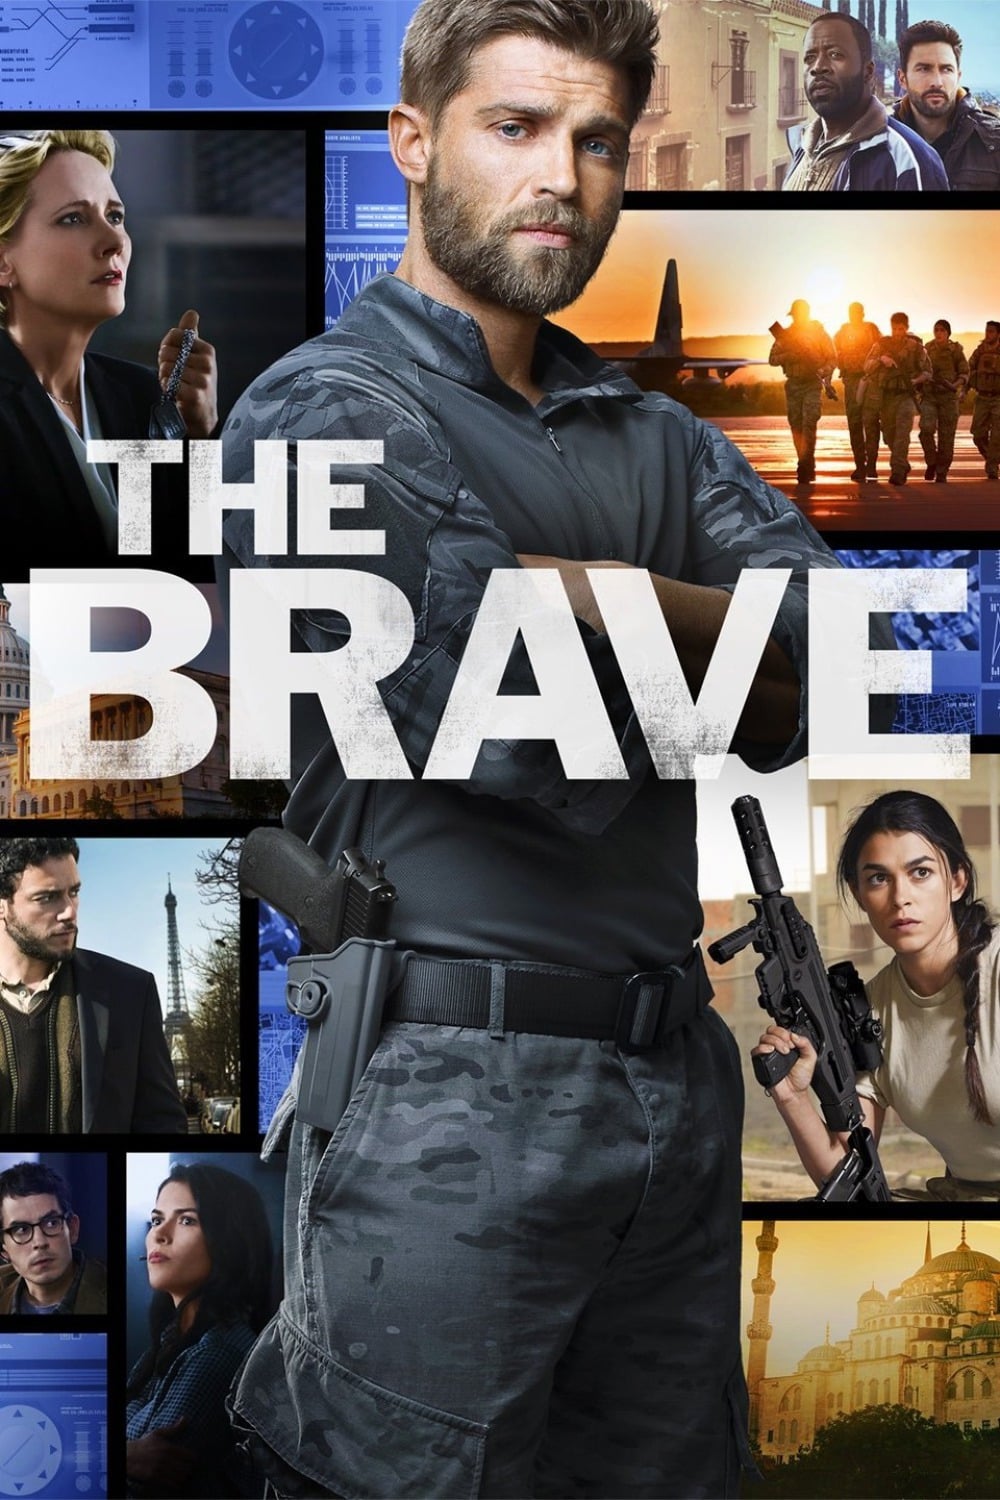 brave 2 release date